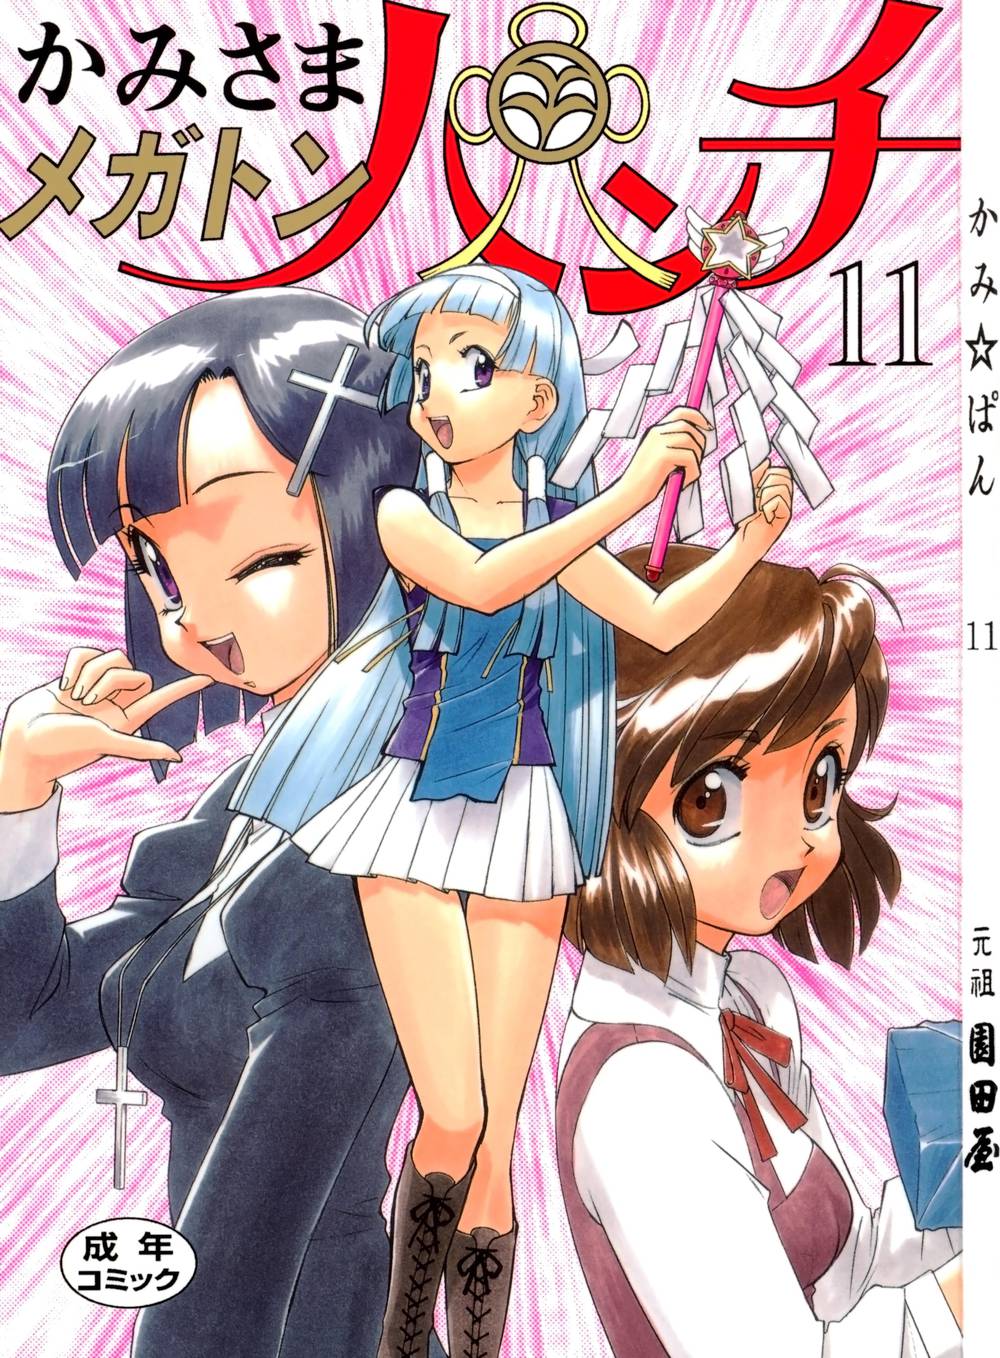 Hentai Manga Comic-Kami-sama Megaton Punch 11-Read-1